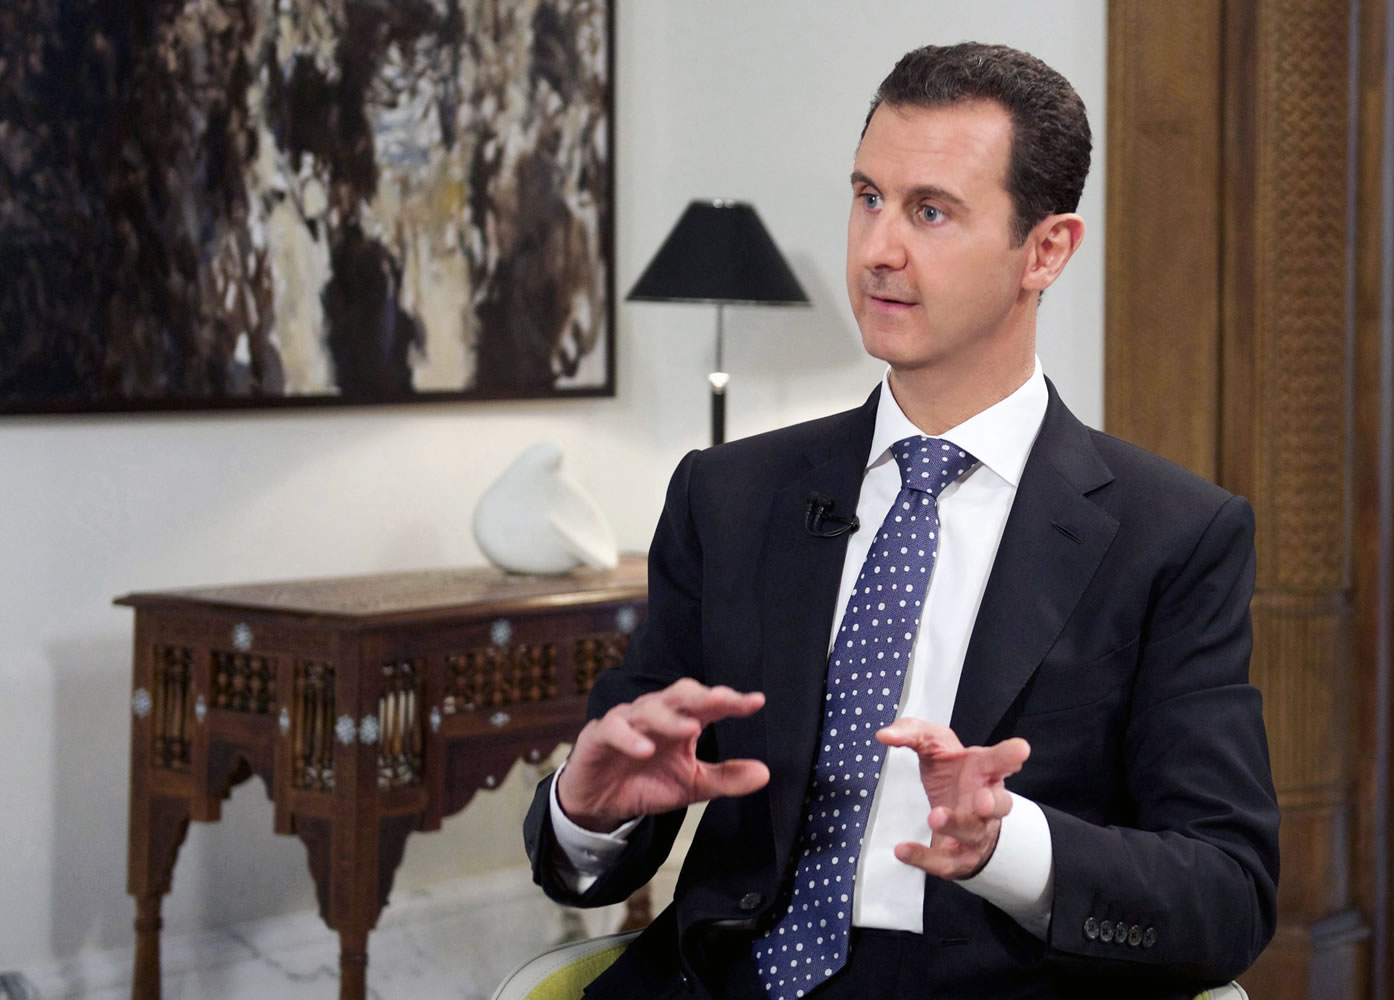 Bashar Assad
Syrian president